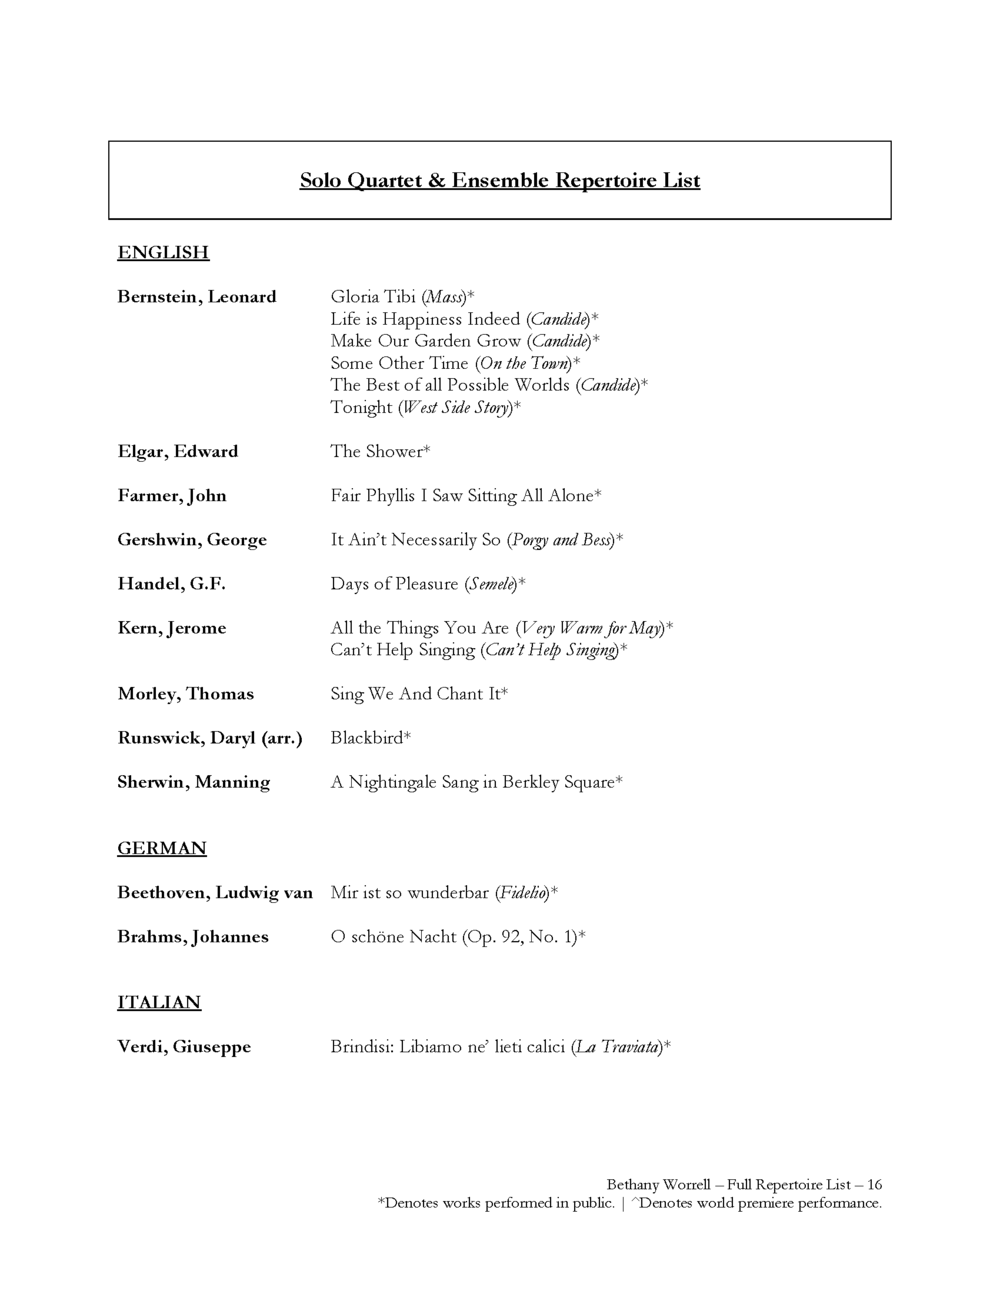 Repertoire List — Bethany Worrell